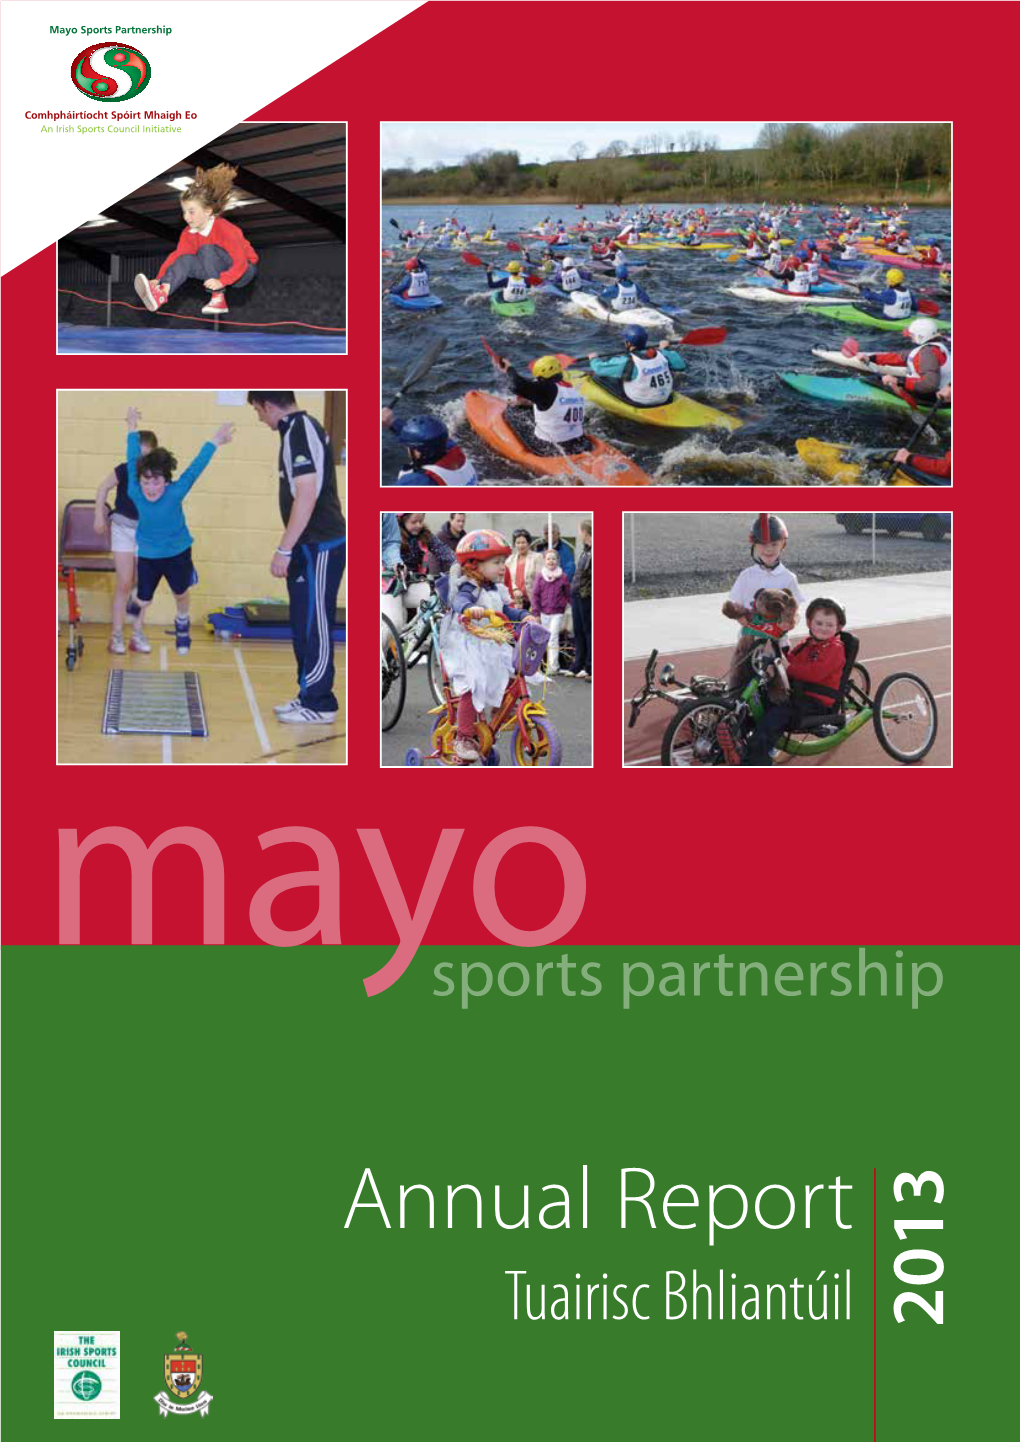 03/11/2020 Mayo Sports Partnership Annual Report 2013